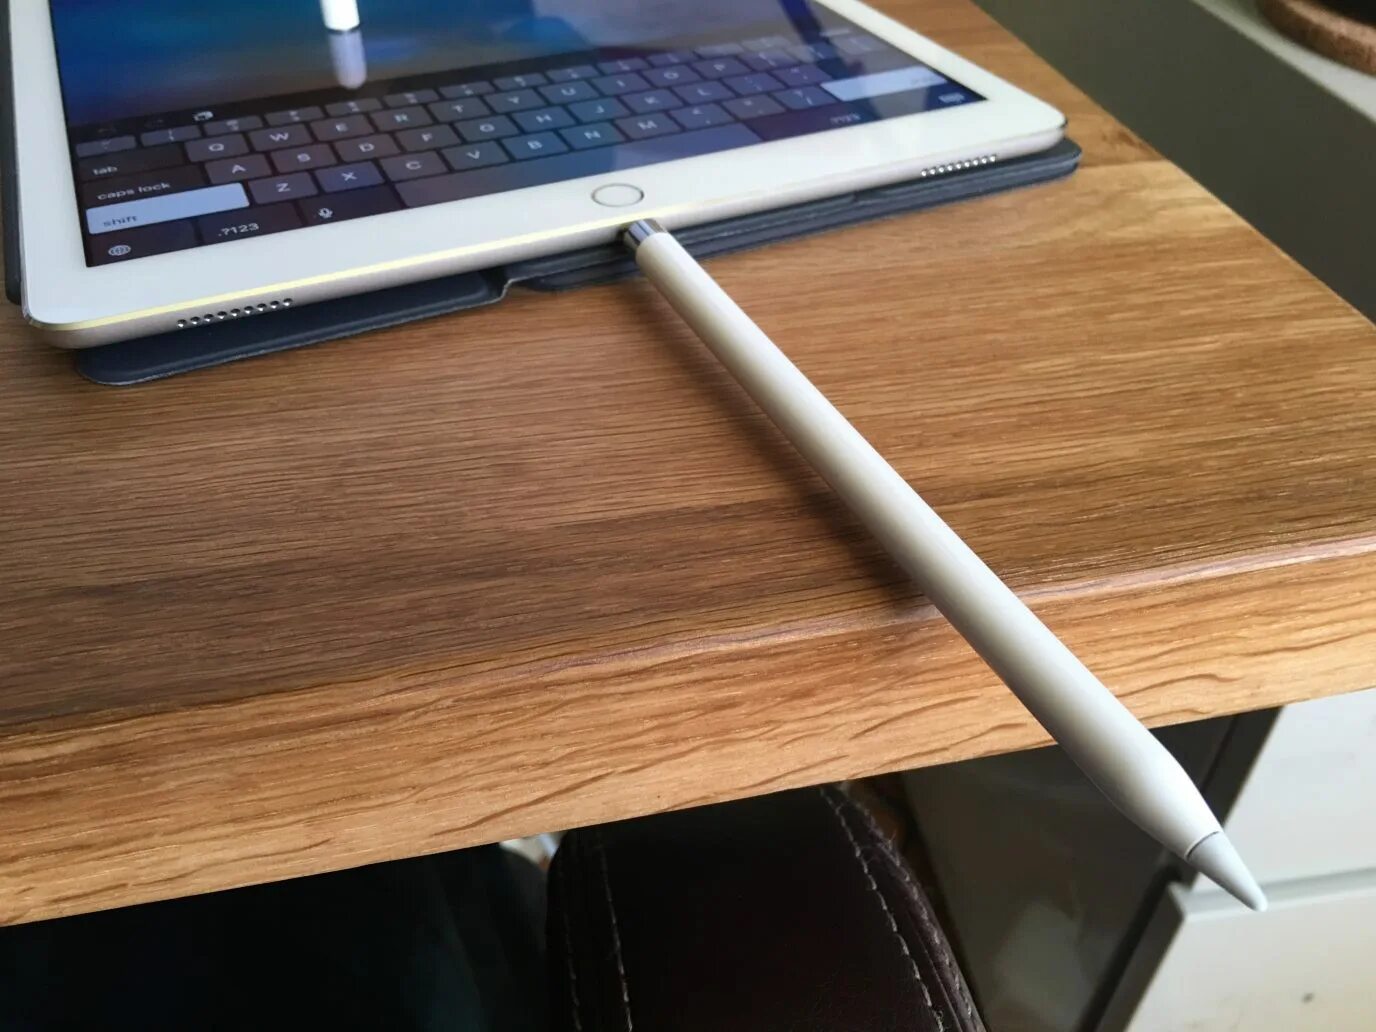 IPAD Apple Pencil 1. Стилус Apple Pencil. Стилус Apple 1 поколения. Apple Pencil 1 заряжается. Зарядка pencil